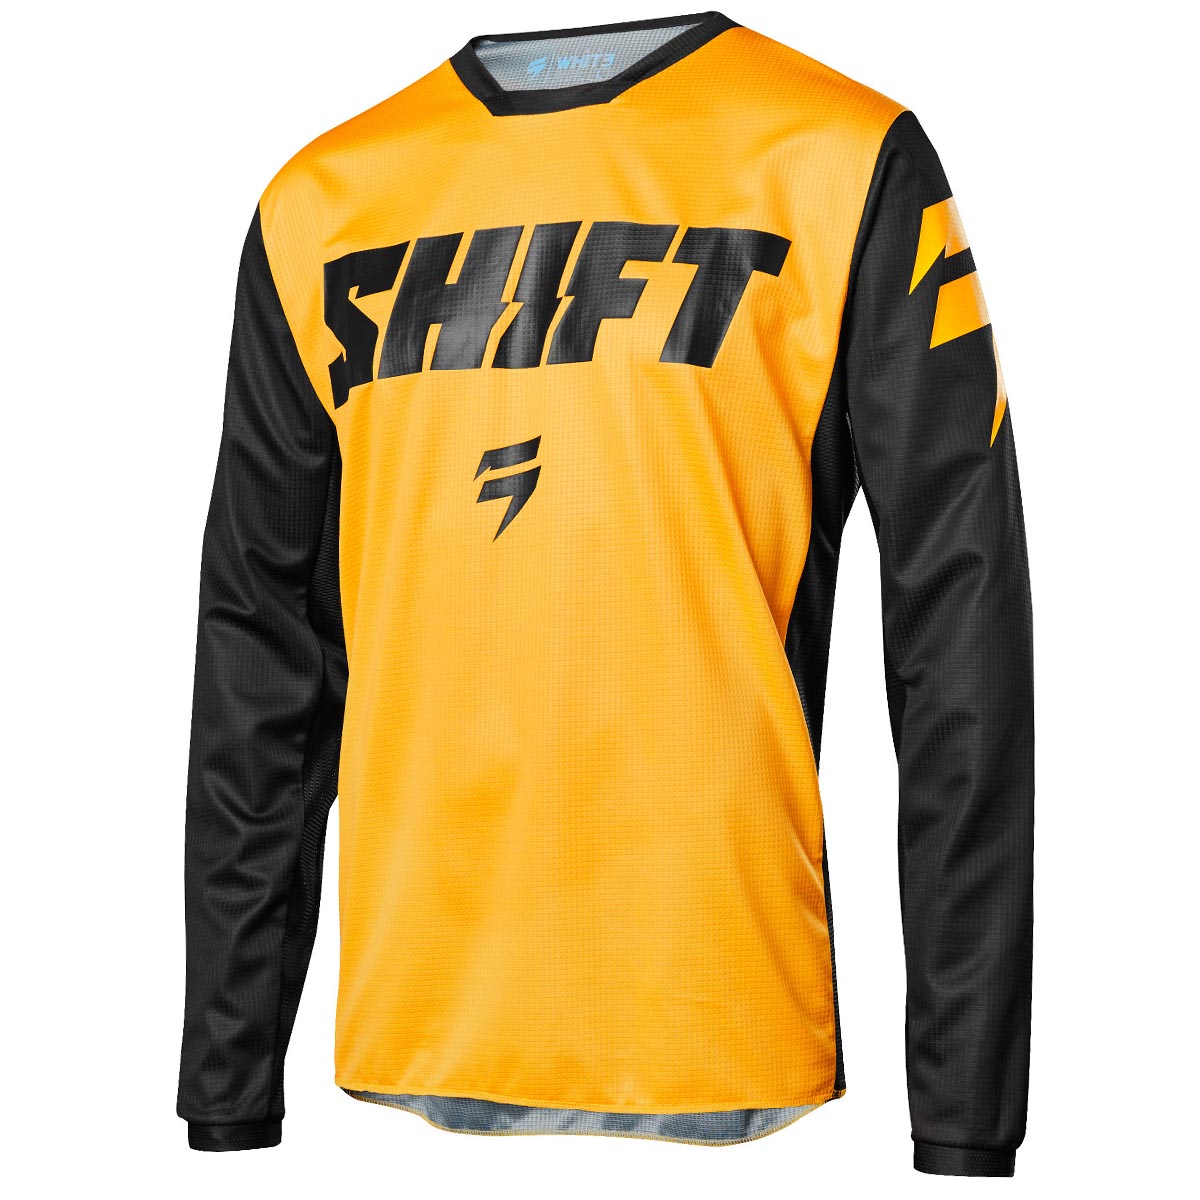 Shift Maillot MX Whit3 Label Ninety Seven - Yellow